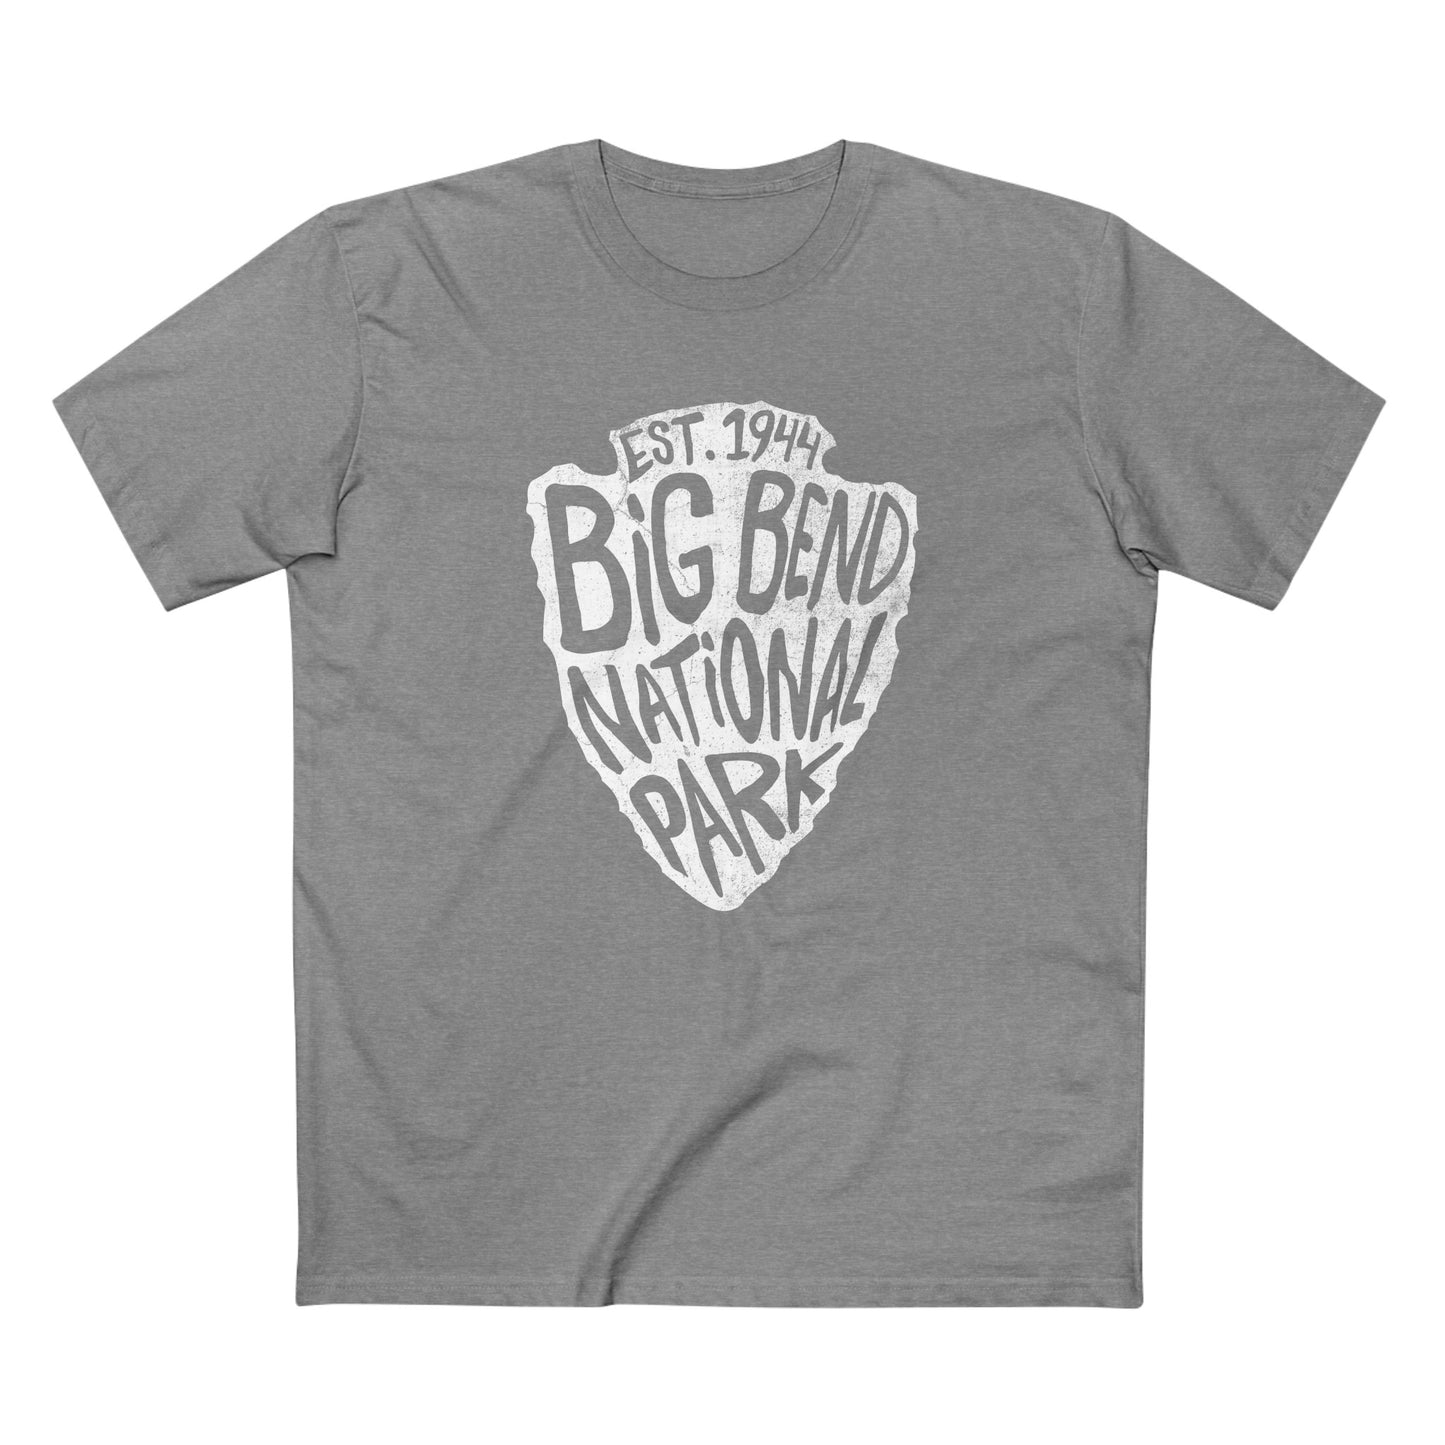 Big Bend National Park T-Shirt - Arrowhead Design